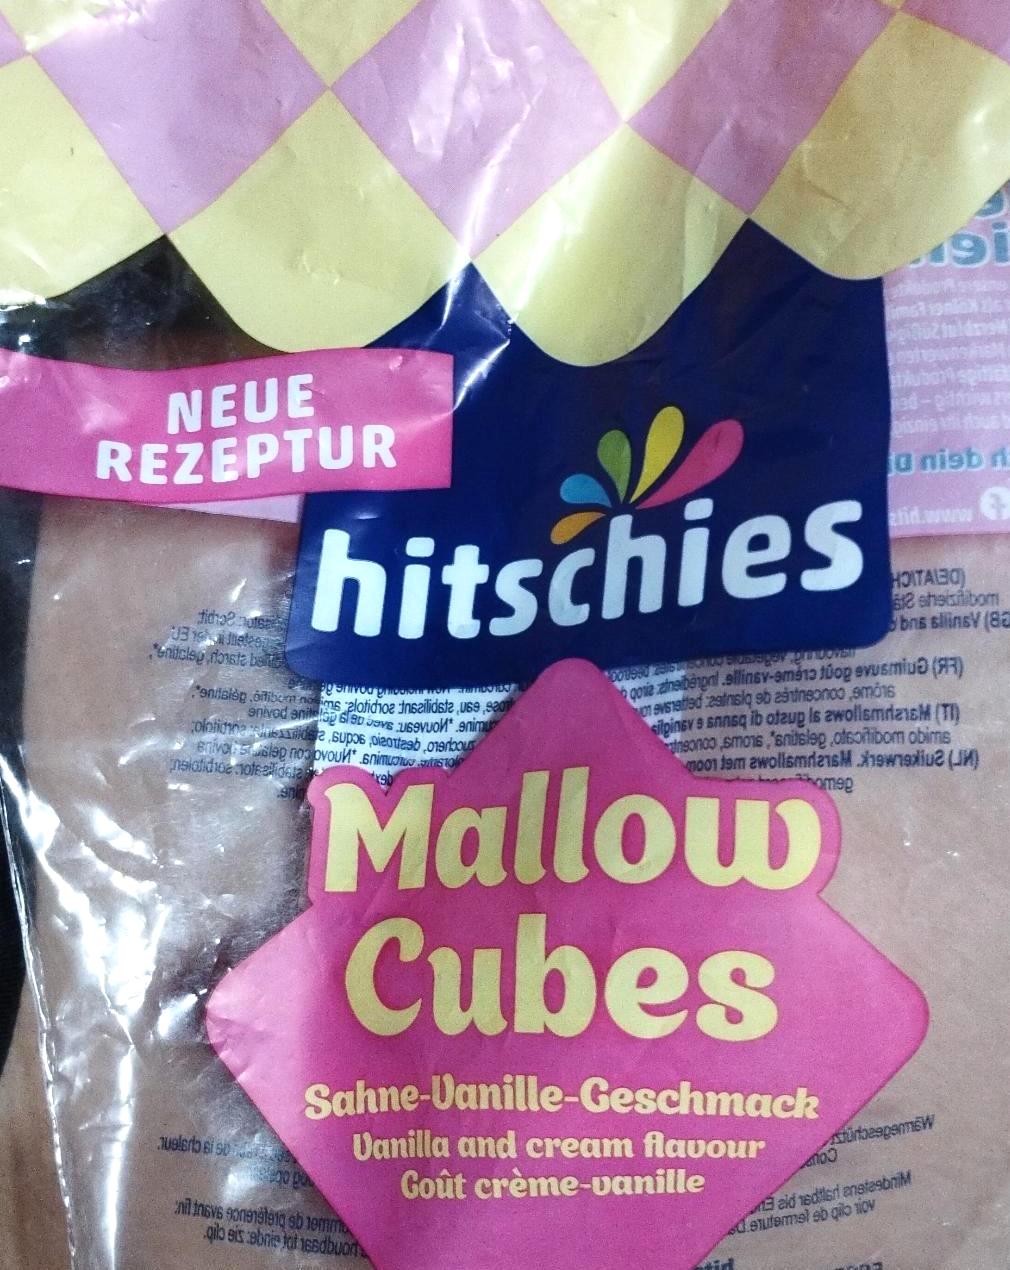 Képek - Mallow cubes Hitschies